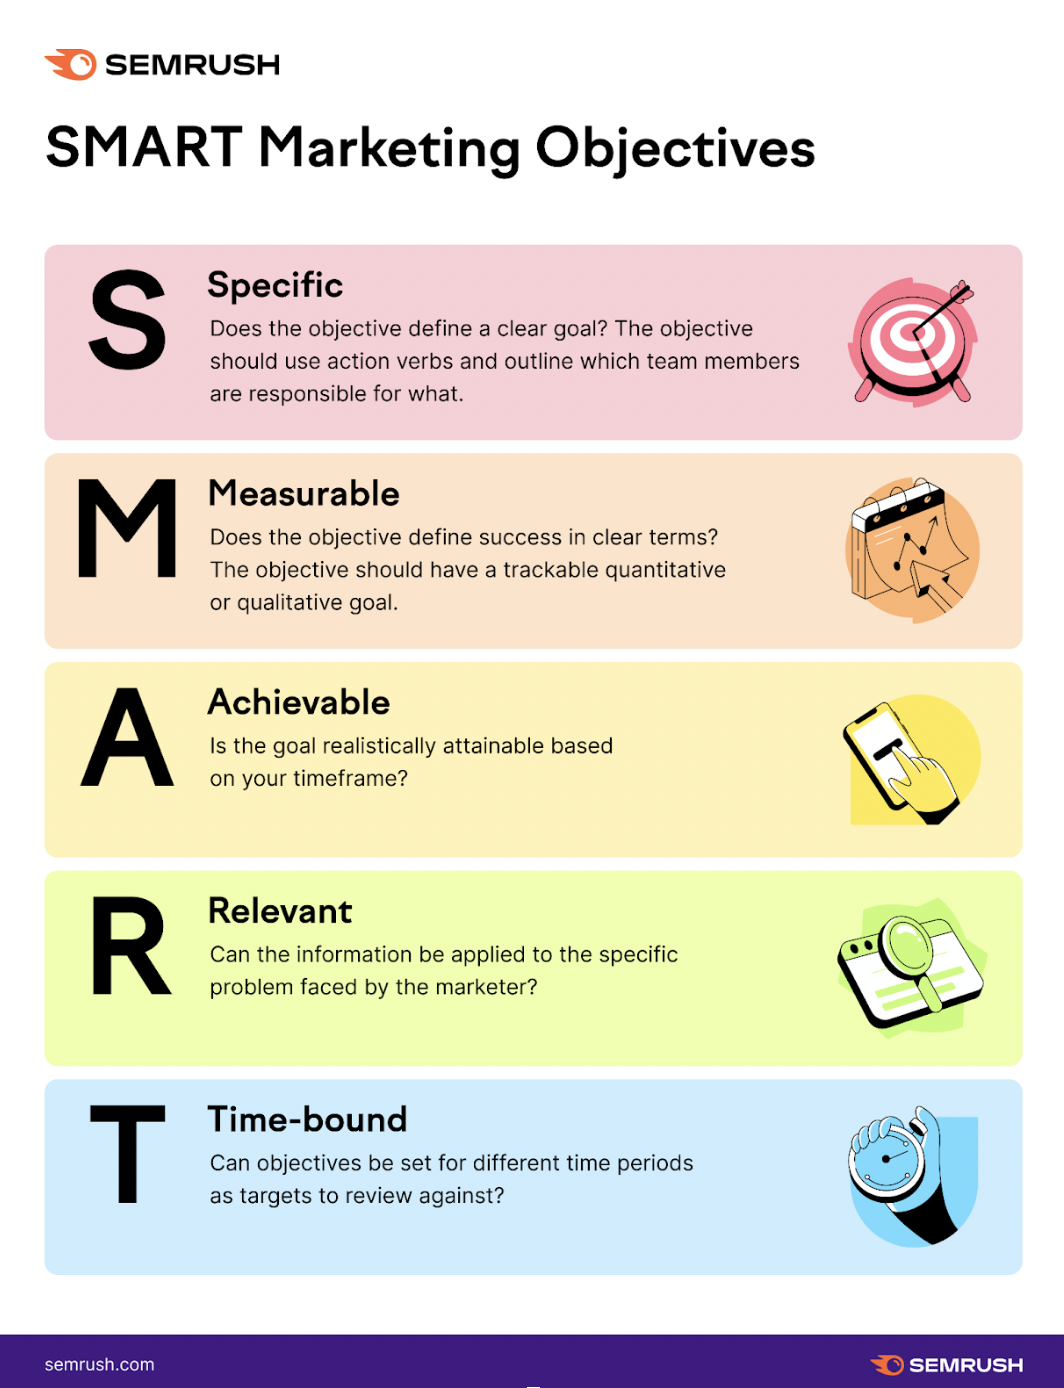 "SMART" Marketing Objectives